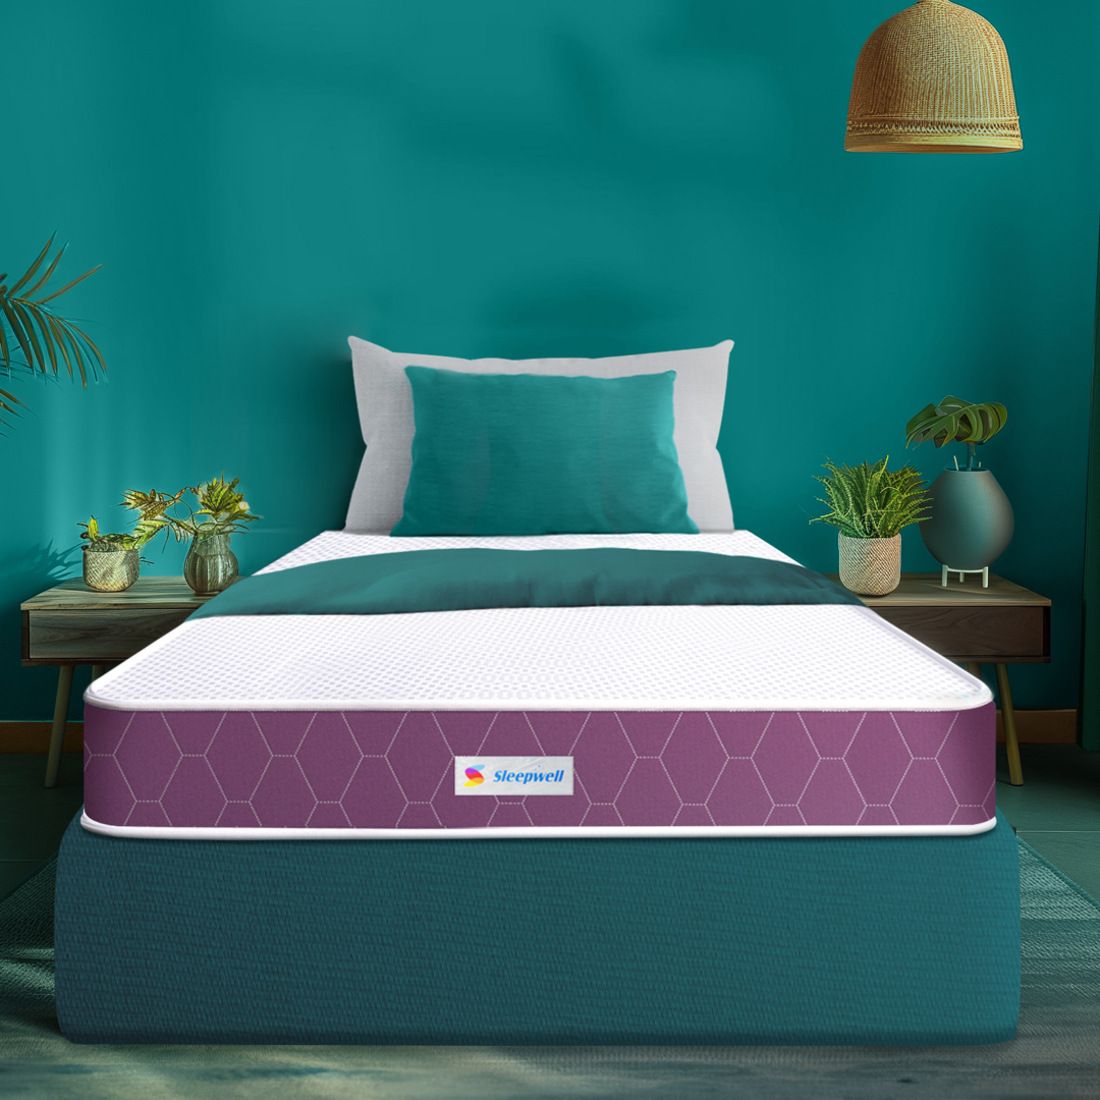 Sleepwell Ortho Mattress | Quilted | 8-inch Single Bed Size, Impressions Memory Foam, Medium Firm Mattress(Purple, 75x42X8)